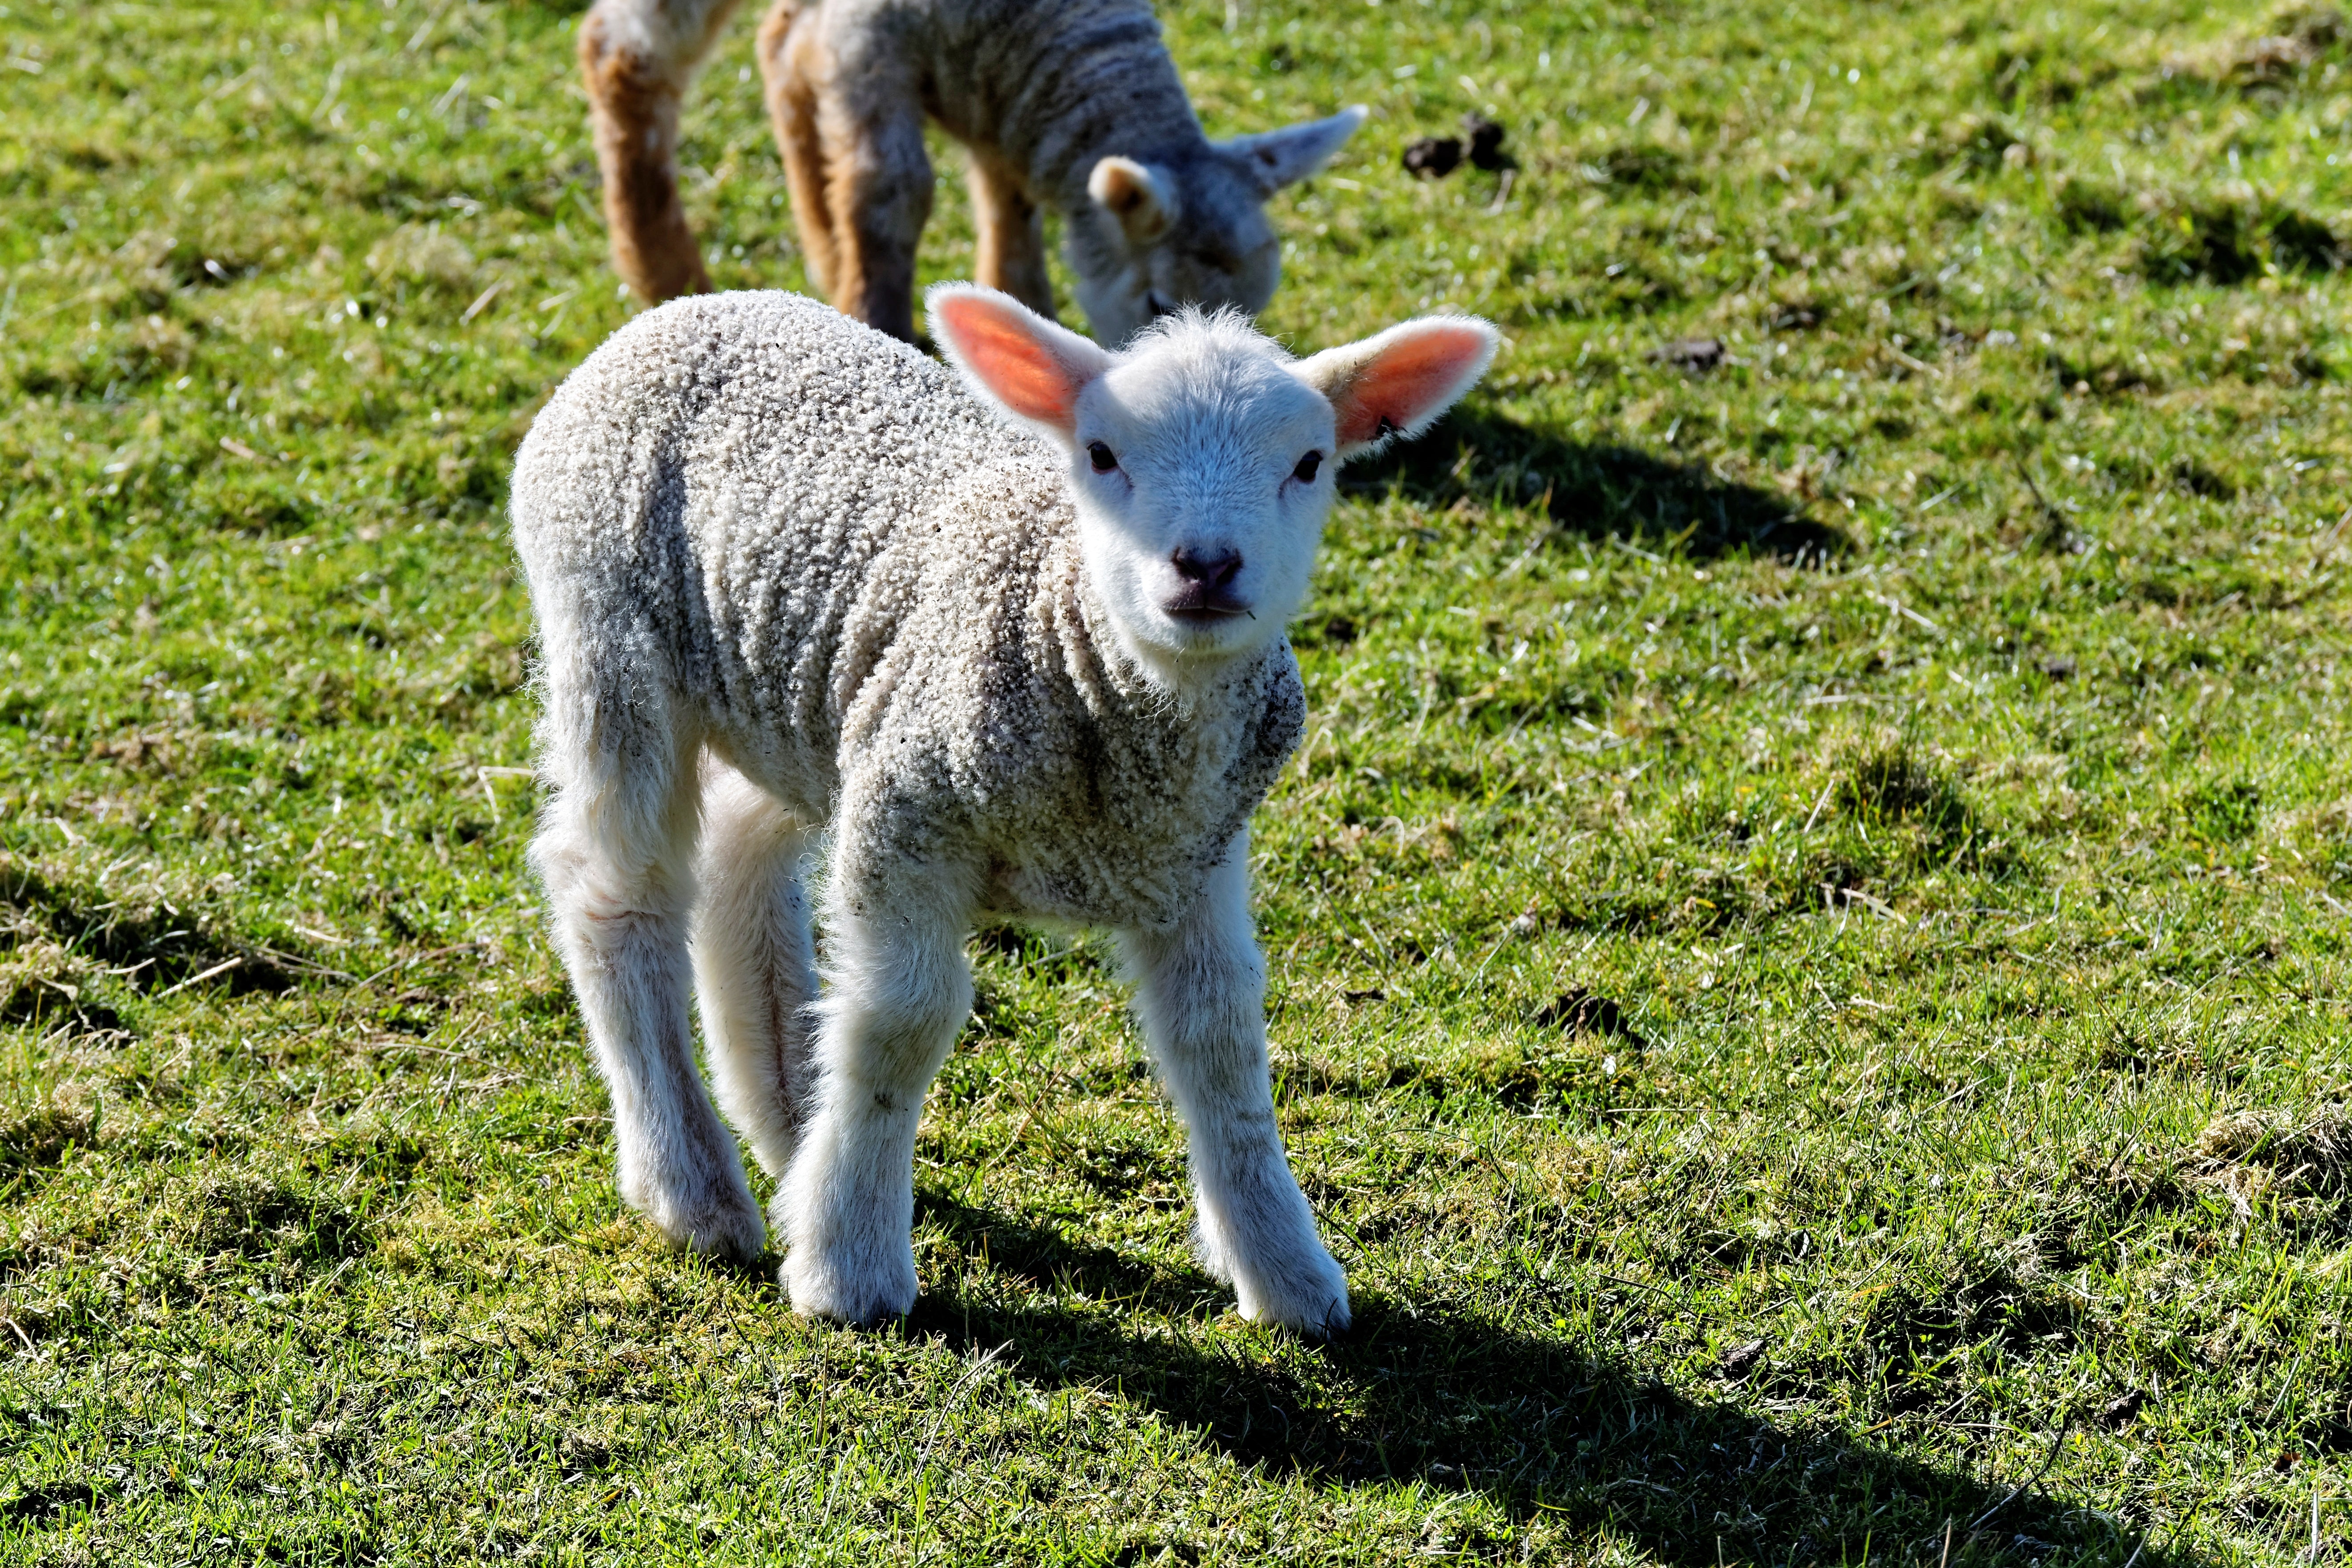 Sheep, Nature, Green, Lamb, Farm, Grass, animal themes, one animal